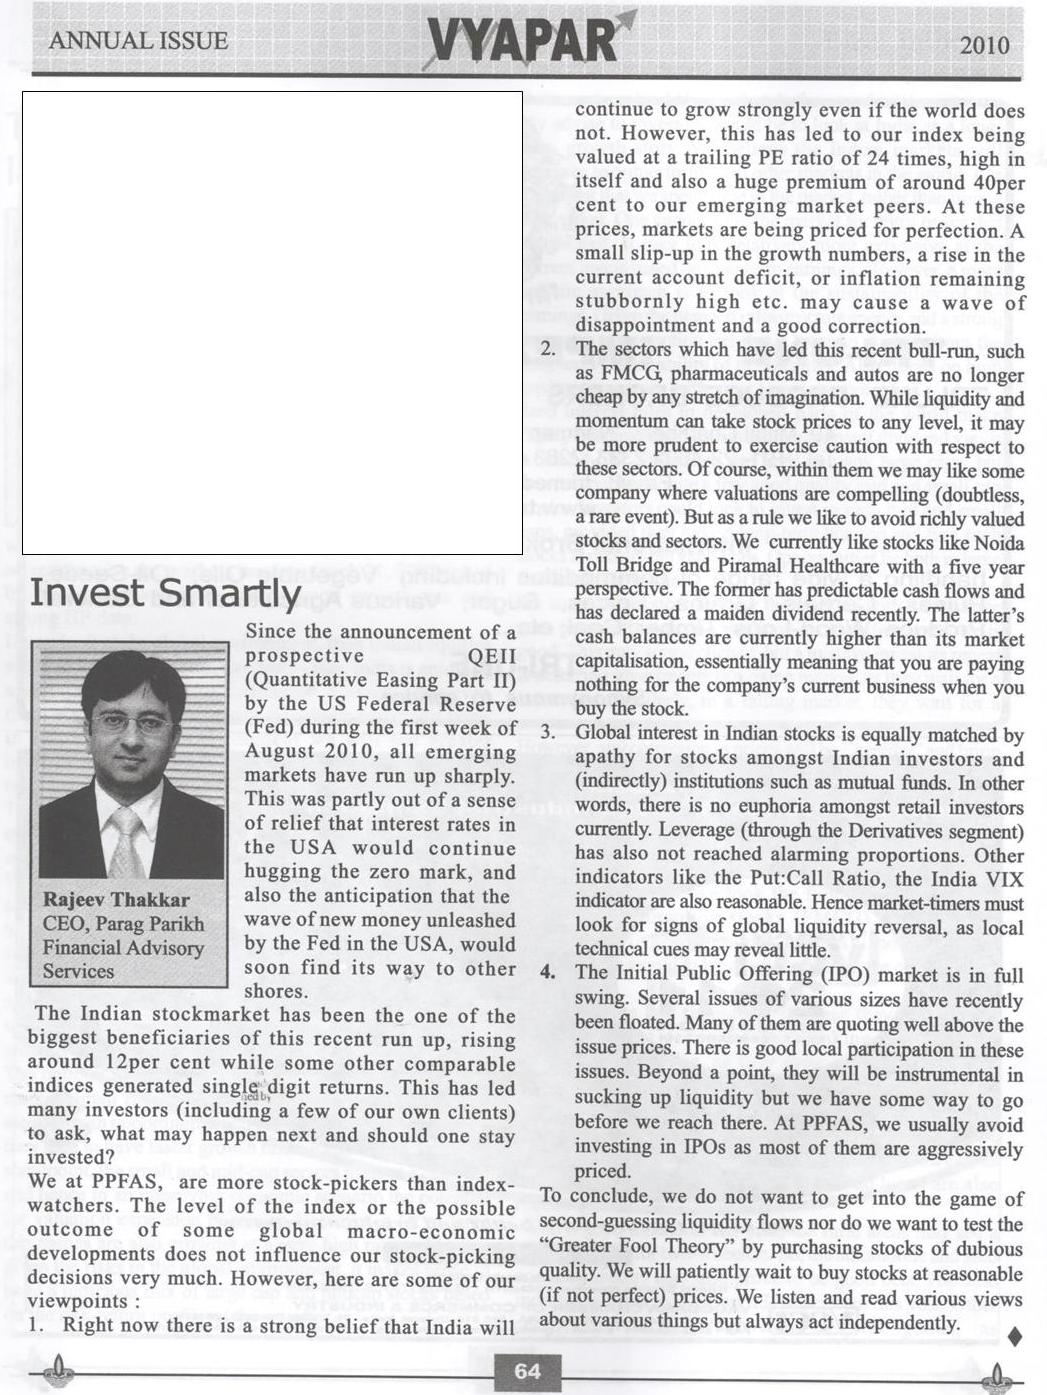 Invest Smartly: Rajeev Thakkar